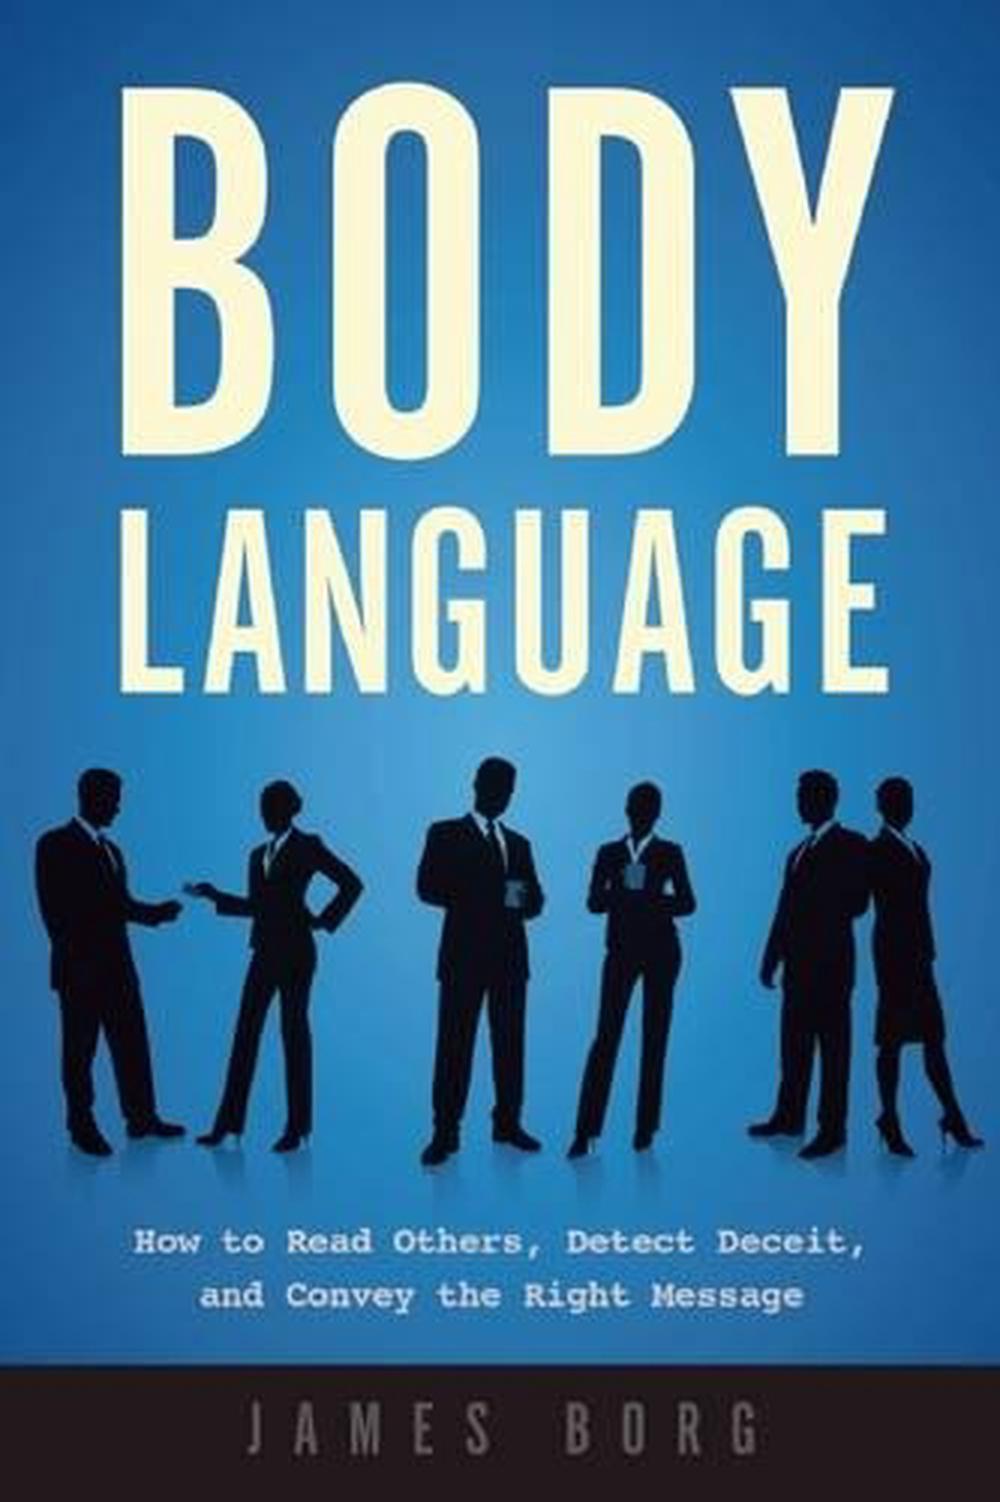 digital body language book review